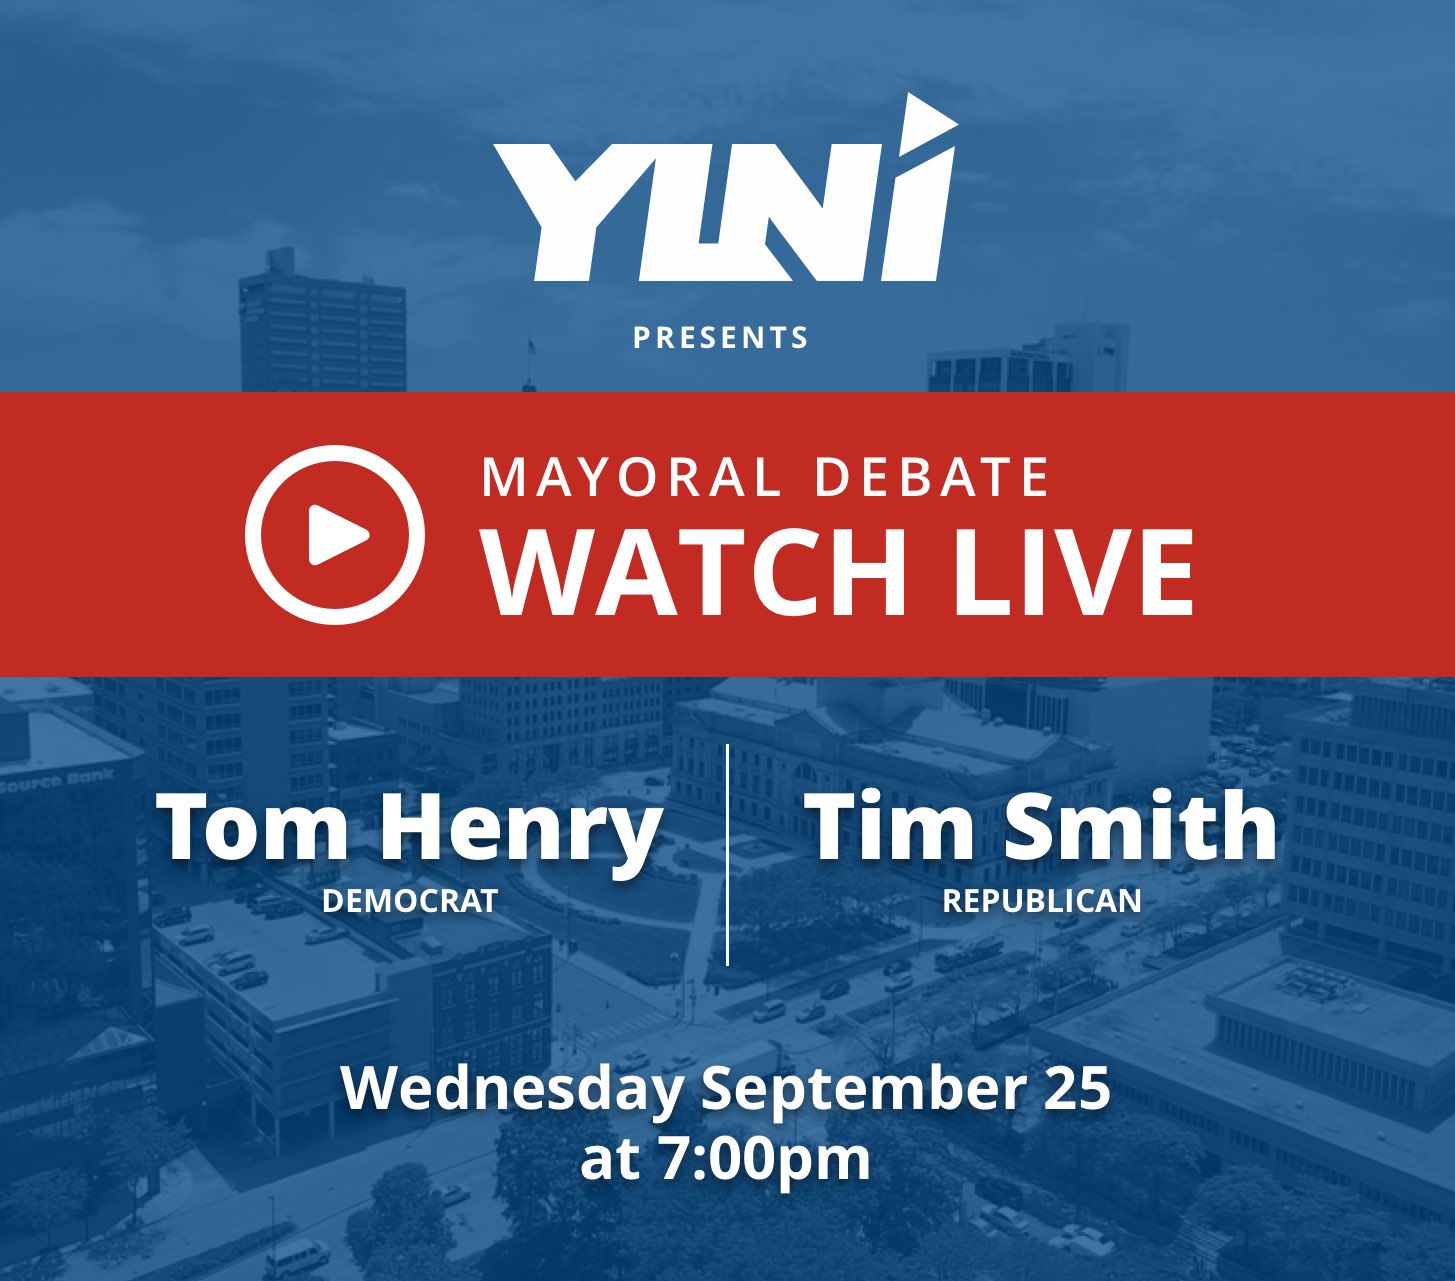 YLNI Mayoral Debate - Watch Live